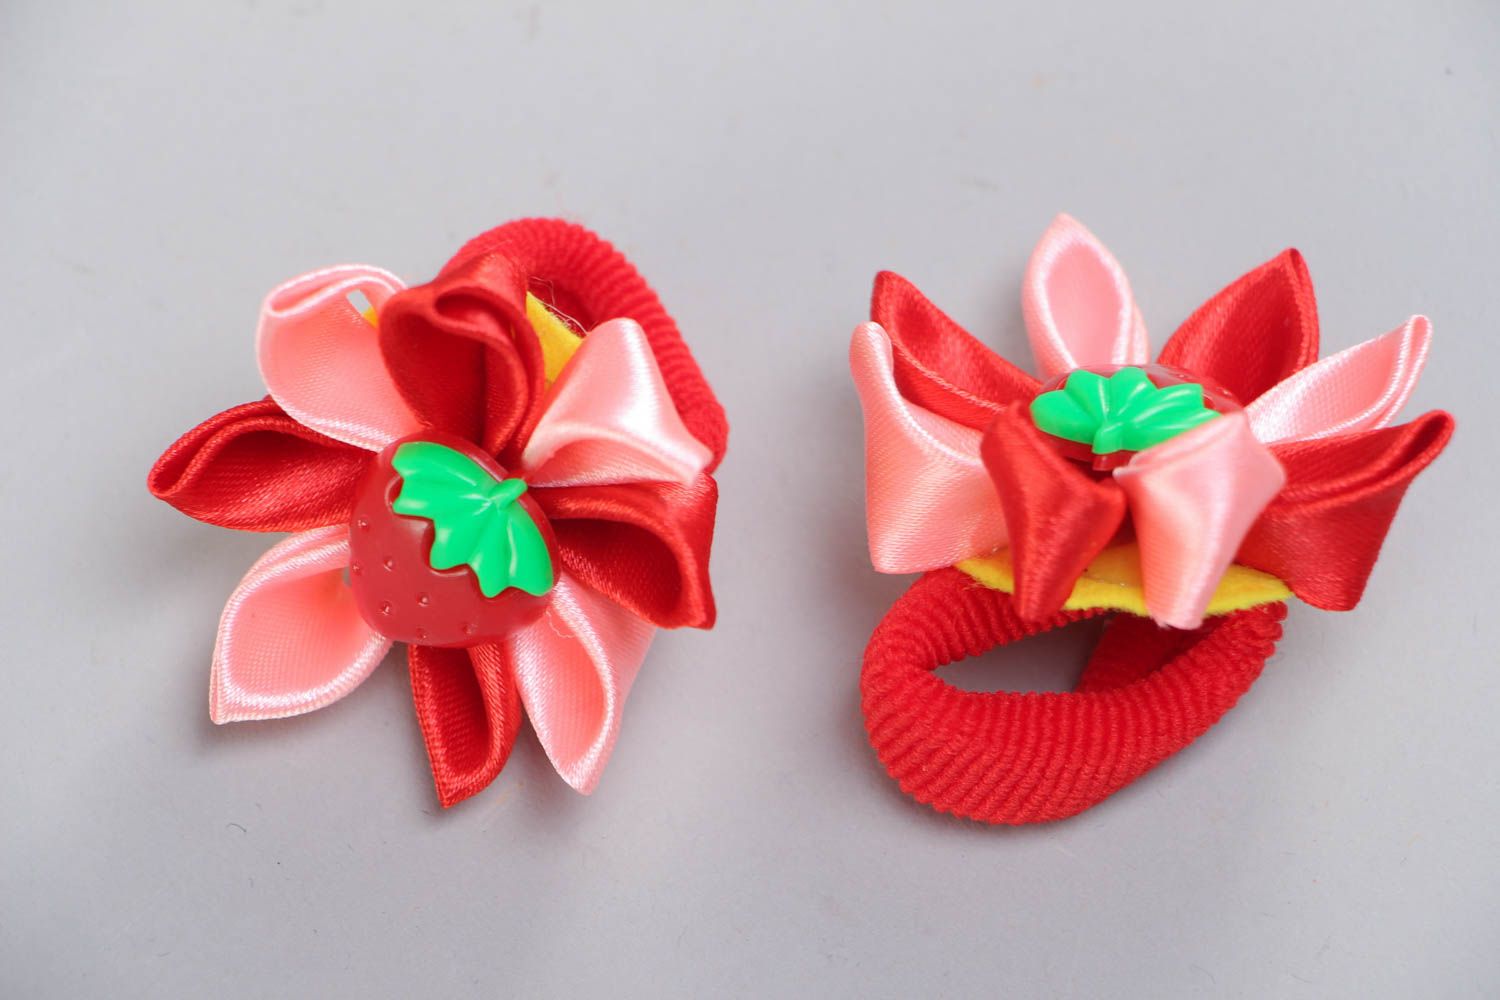 Handmade festive hair ties with red satin ribbon kanzashi flowers set of 2 items photo 3